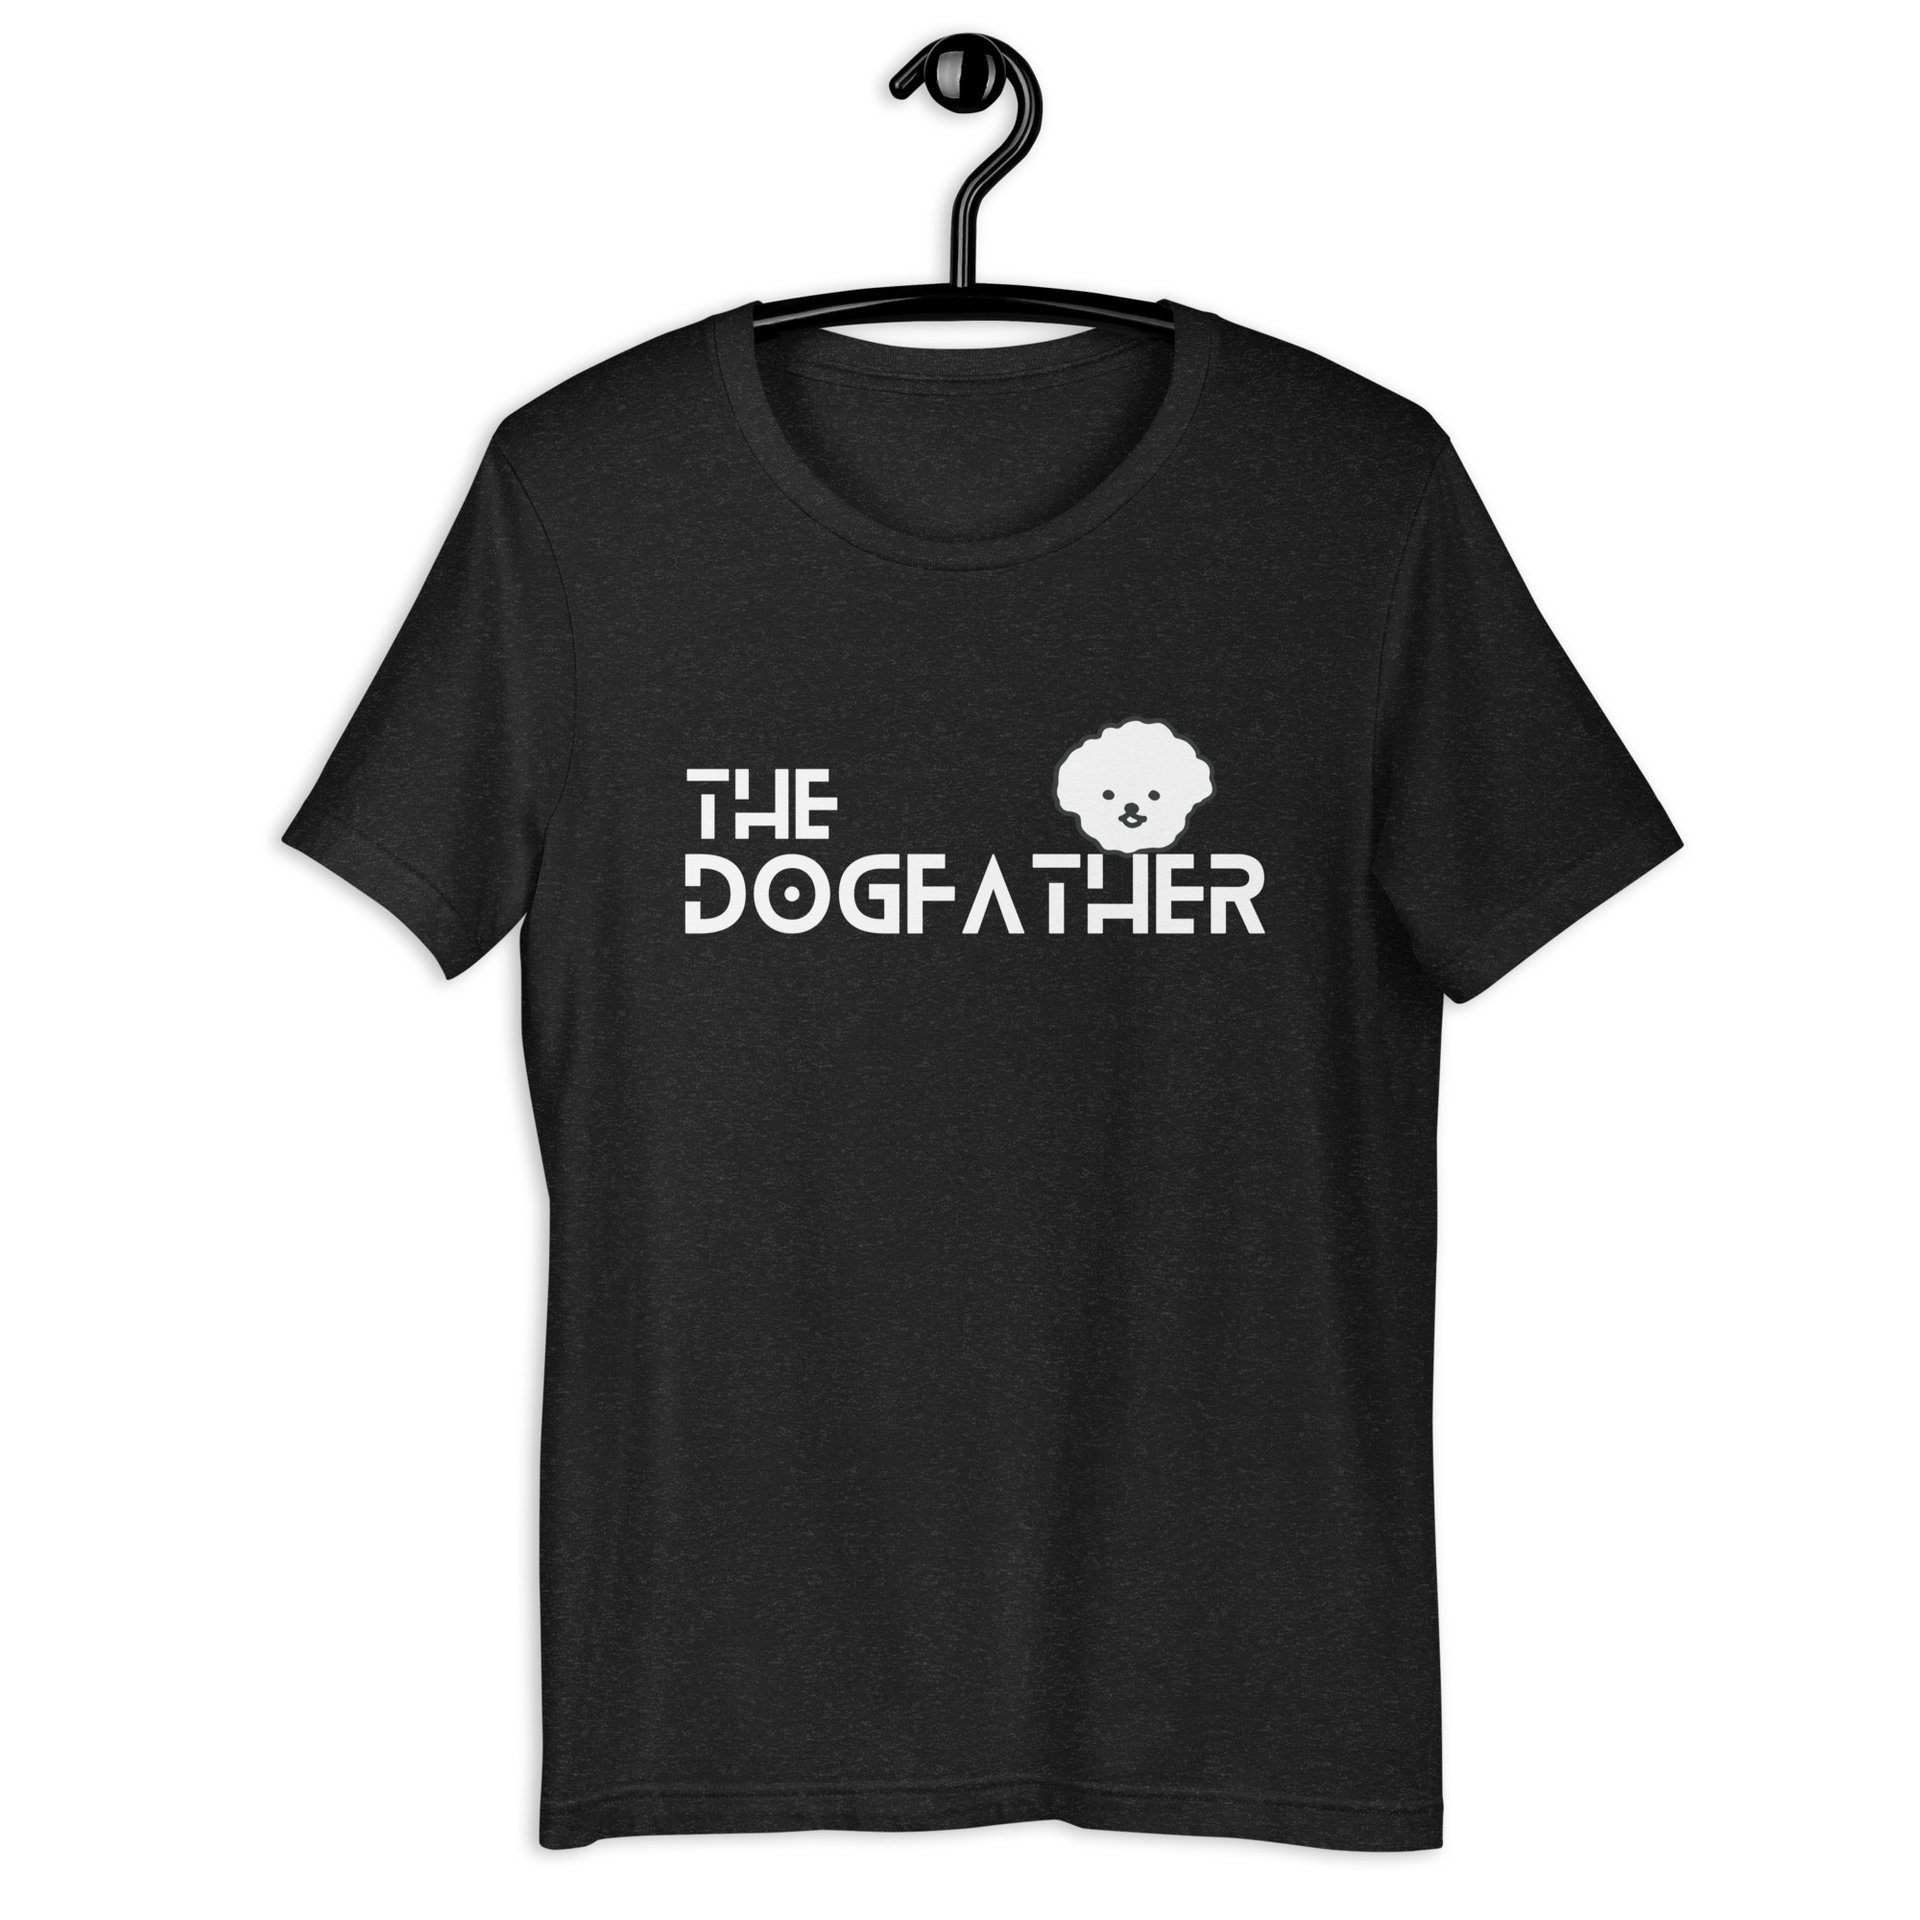 The Dogfather Poodles Unisex T-Shirt. Black Heather